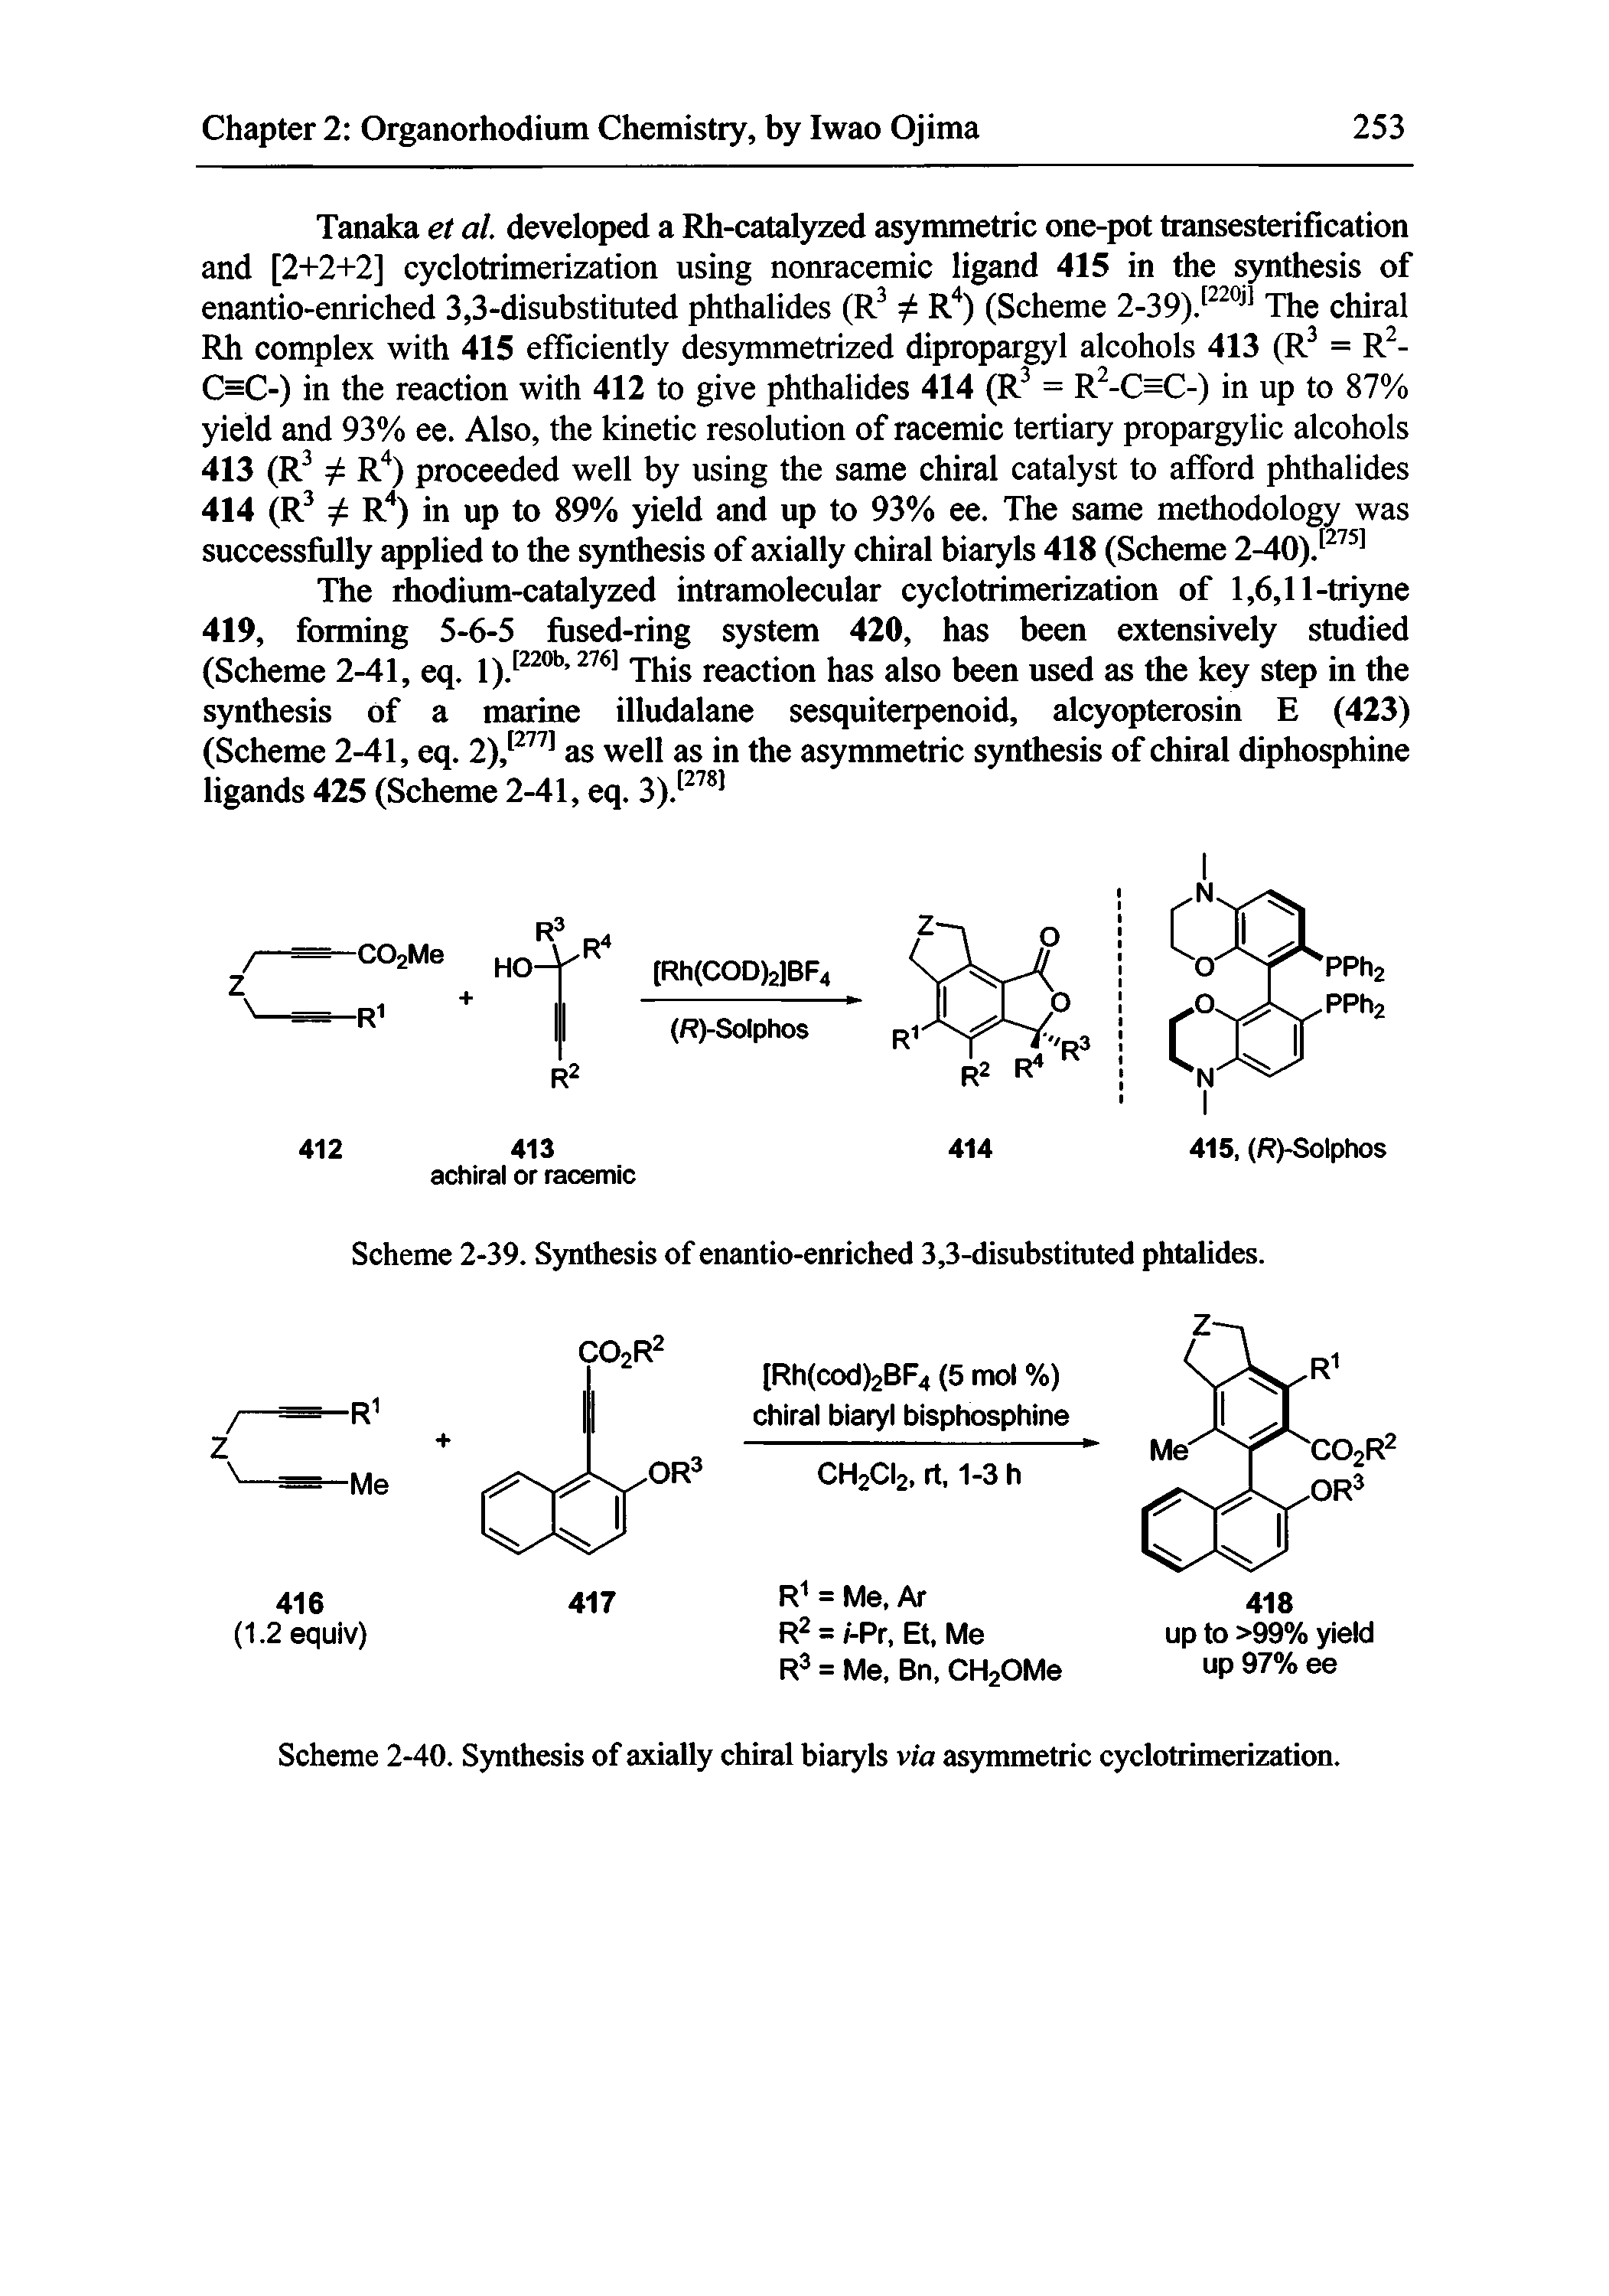 Scheme 2-40. Synthesis of axially chiral biaryls via asymmetric cyclotrimerization.